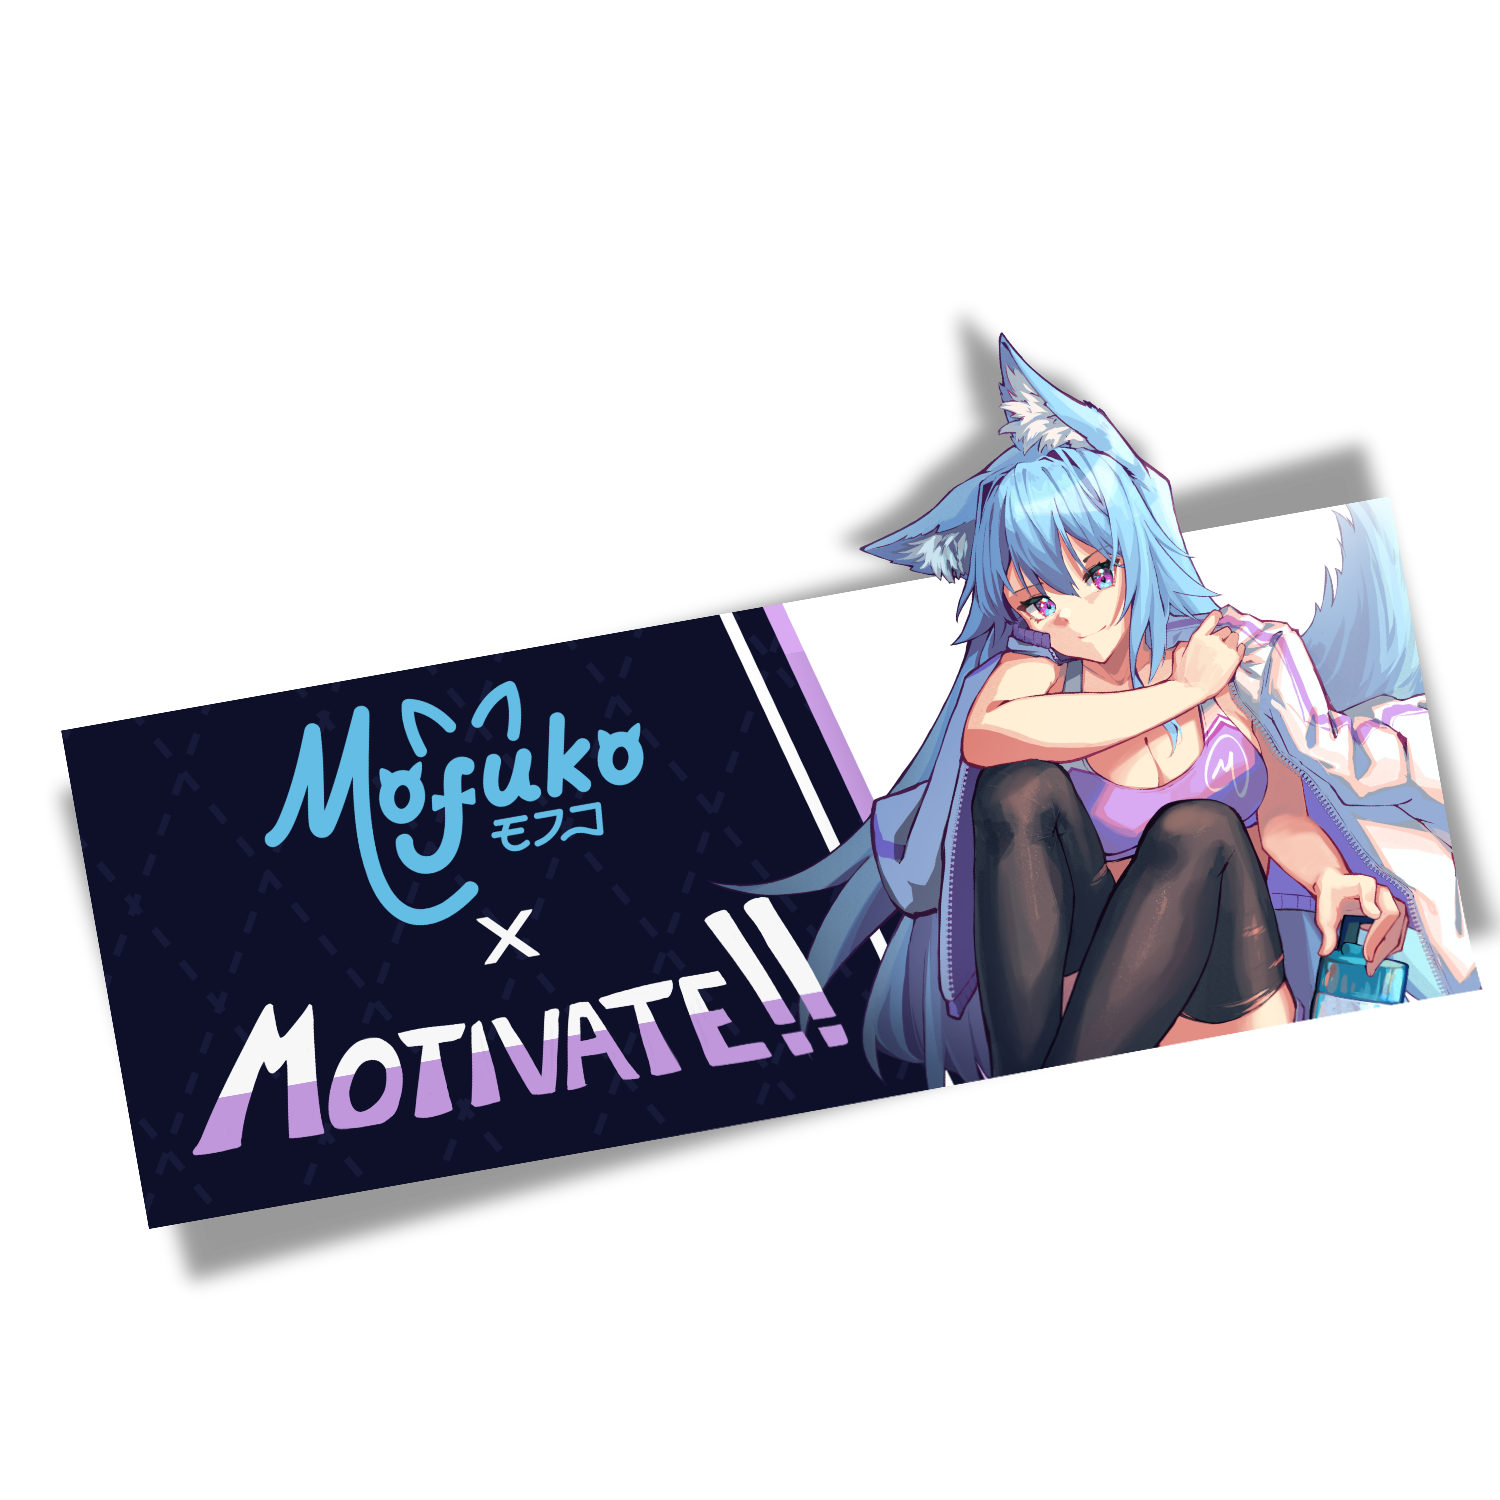 Mofuko x Motivate!! Heart Holographic Sticker